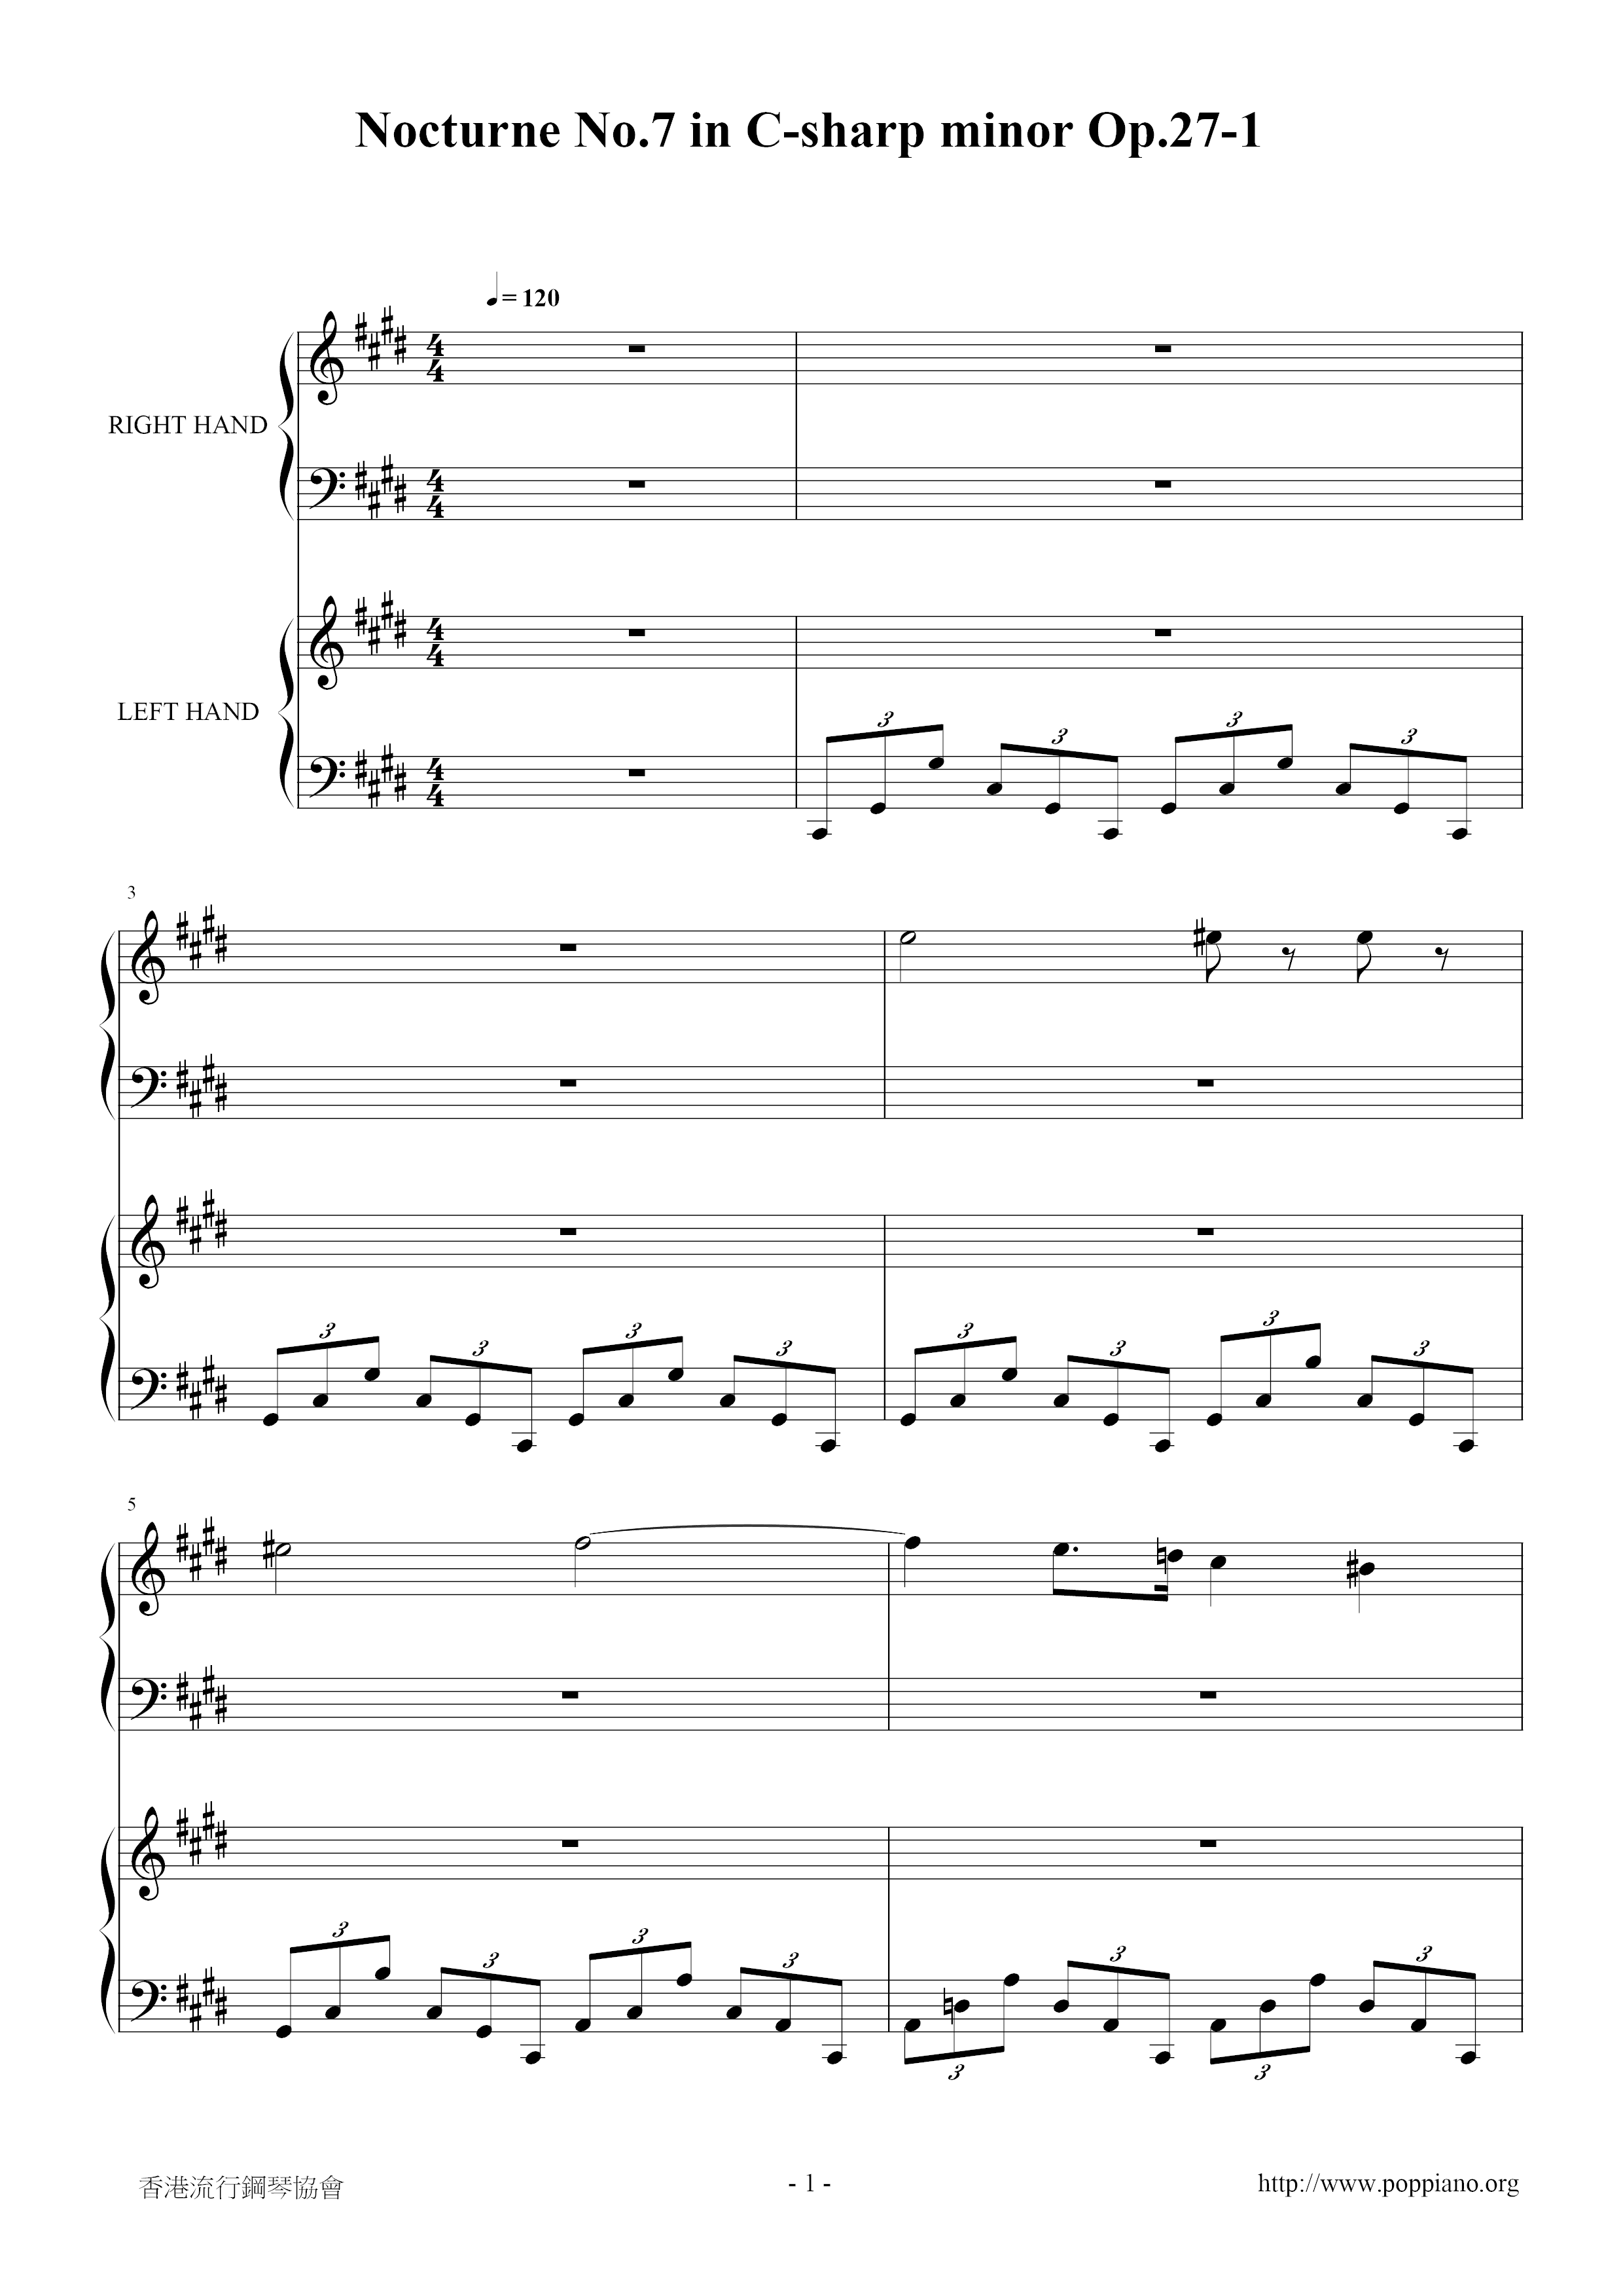 Nocturne No. 07, Op. 27-1 in C# Minor Score